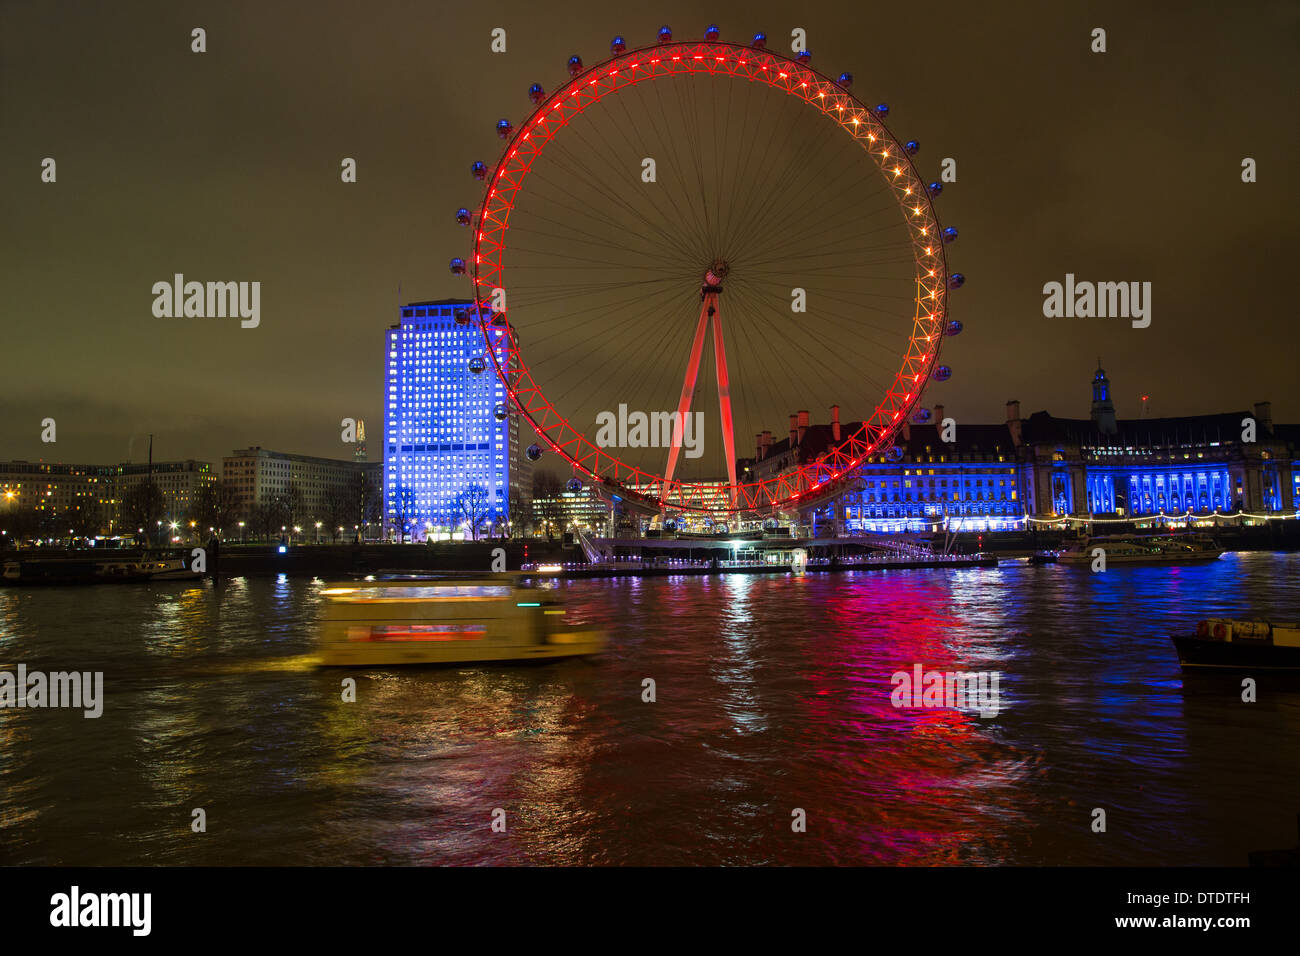 London Eye illuminated at night across the river Thames Stock Photo